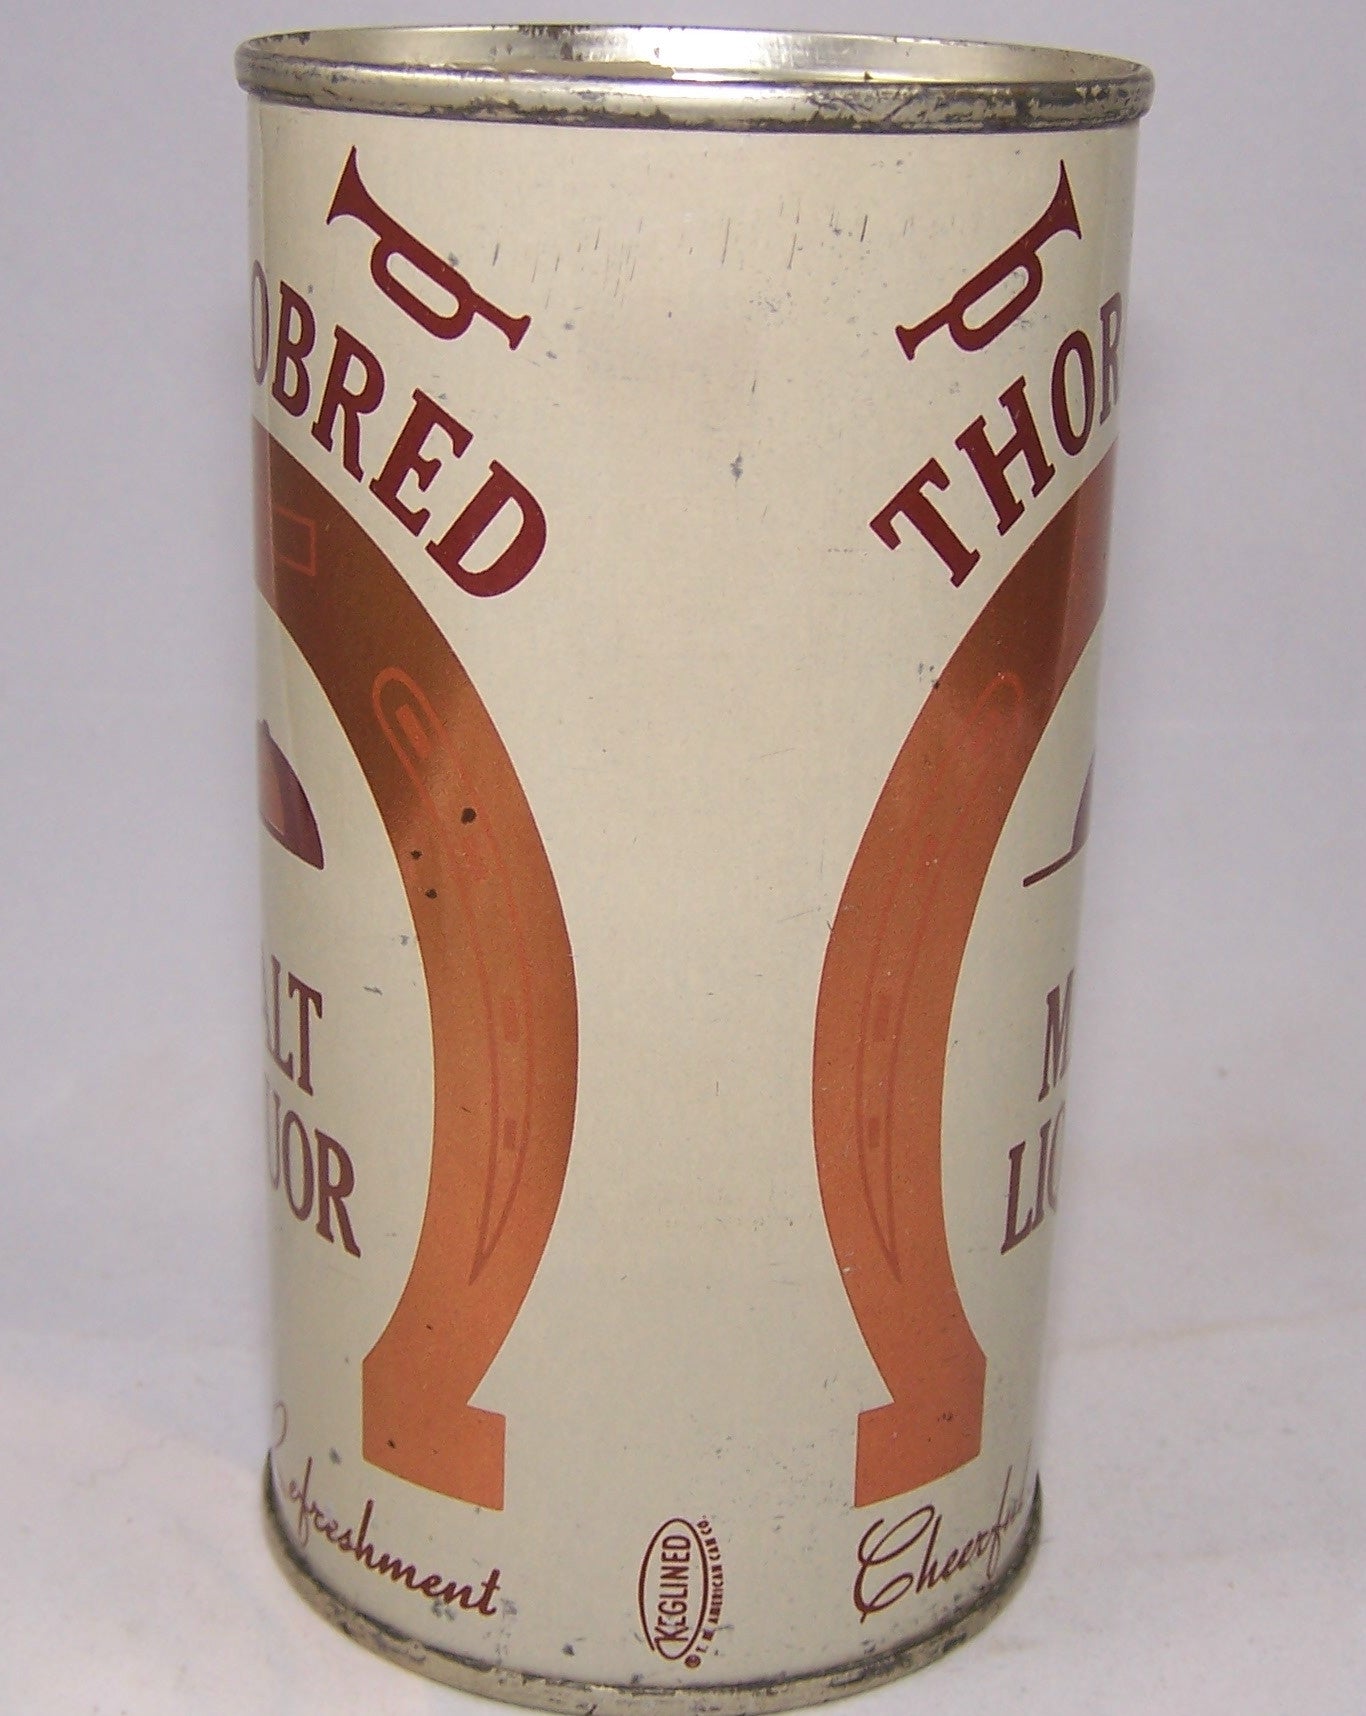 Thorobred Malt Liquor, USBC II 130-05, Grade 1 to 1/1+ Sold 10/8/15